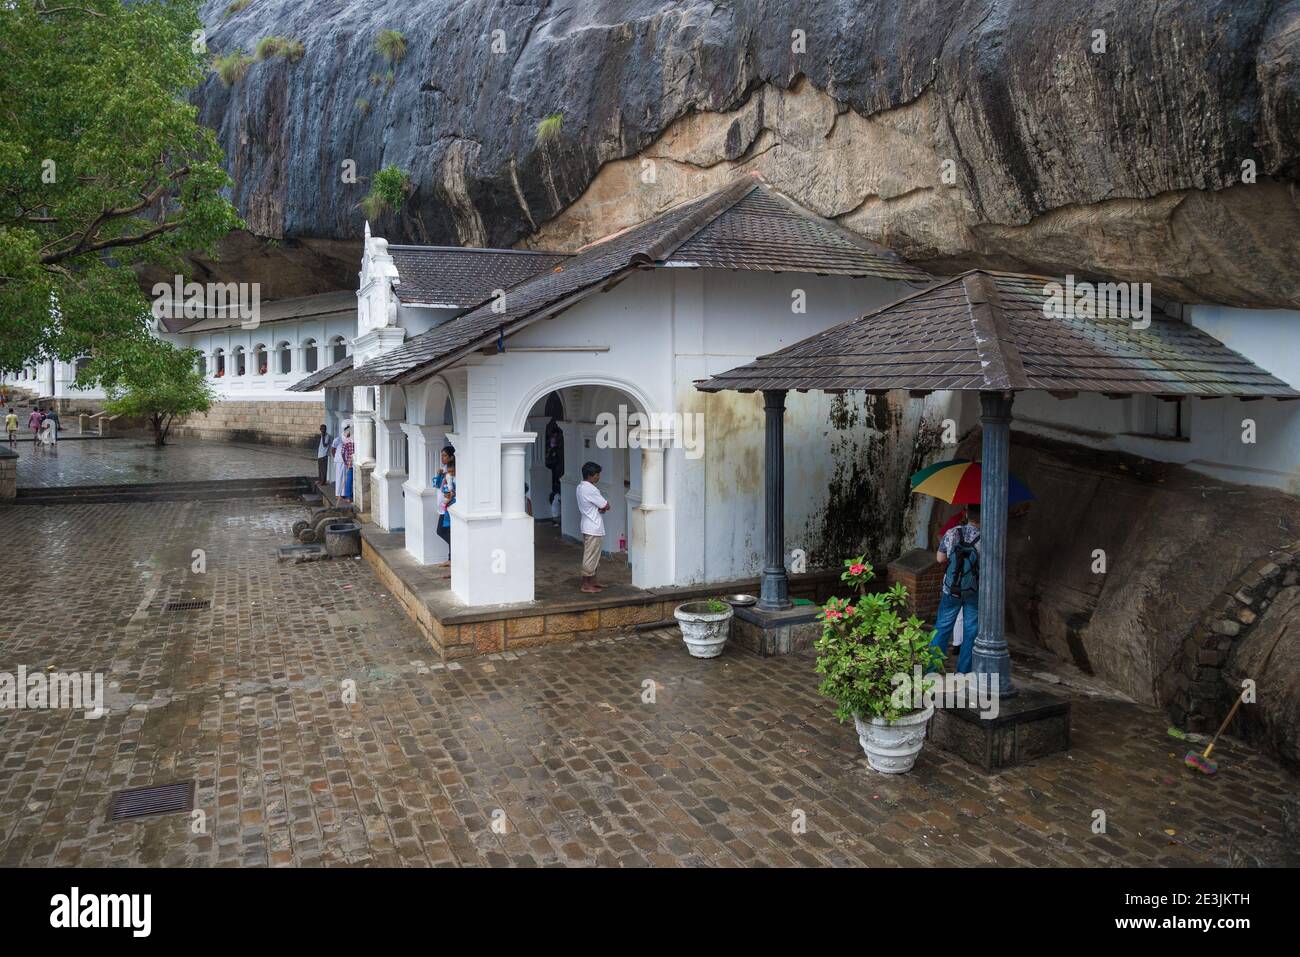 DAMBULLA, SRI LANKA - 14. MÄRZ 2015: Regnerischer Tag am alten Höhlenbuddhistentempel von Rangiri Dambulu Raja Maha Viharaya (Goldener Tempel) Stockfoto